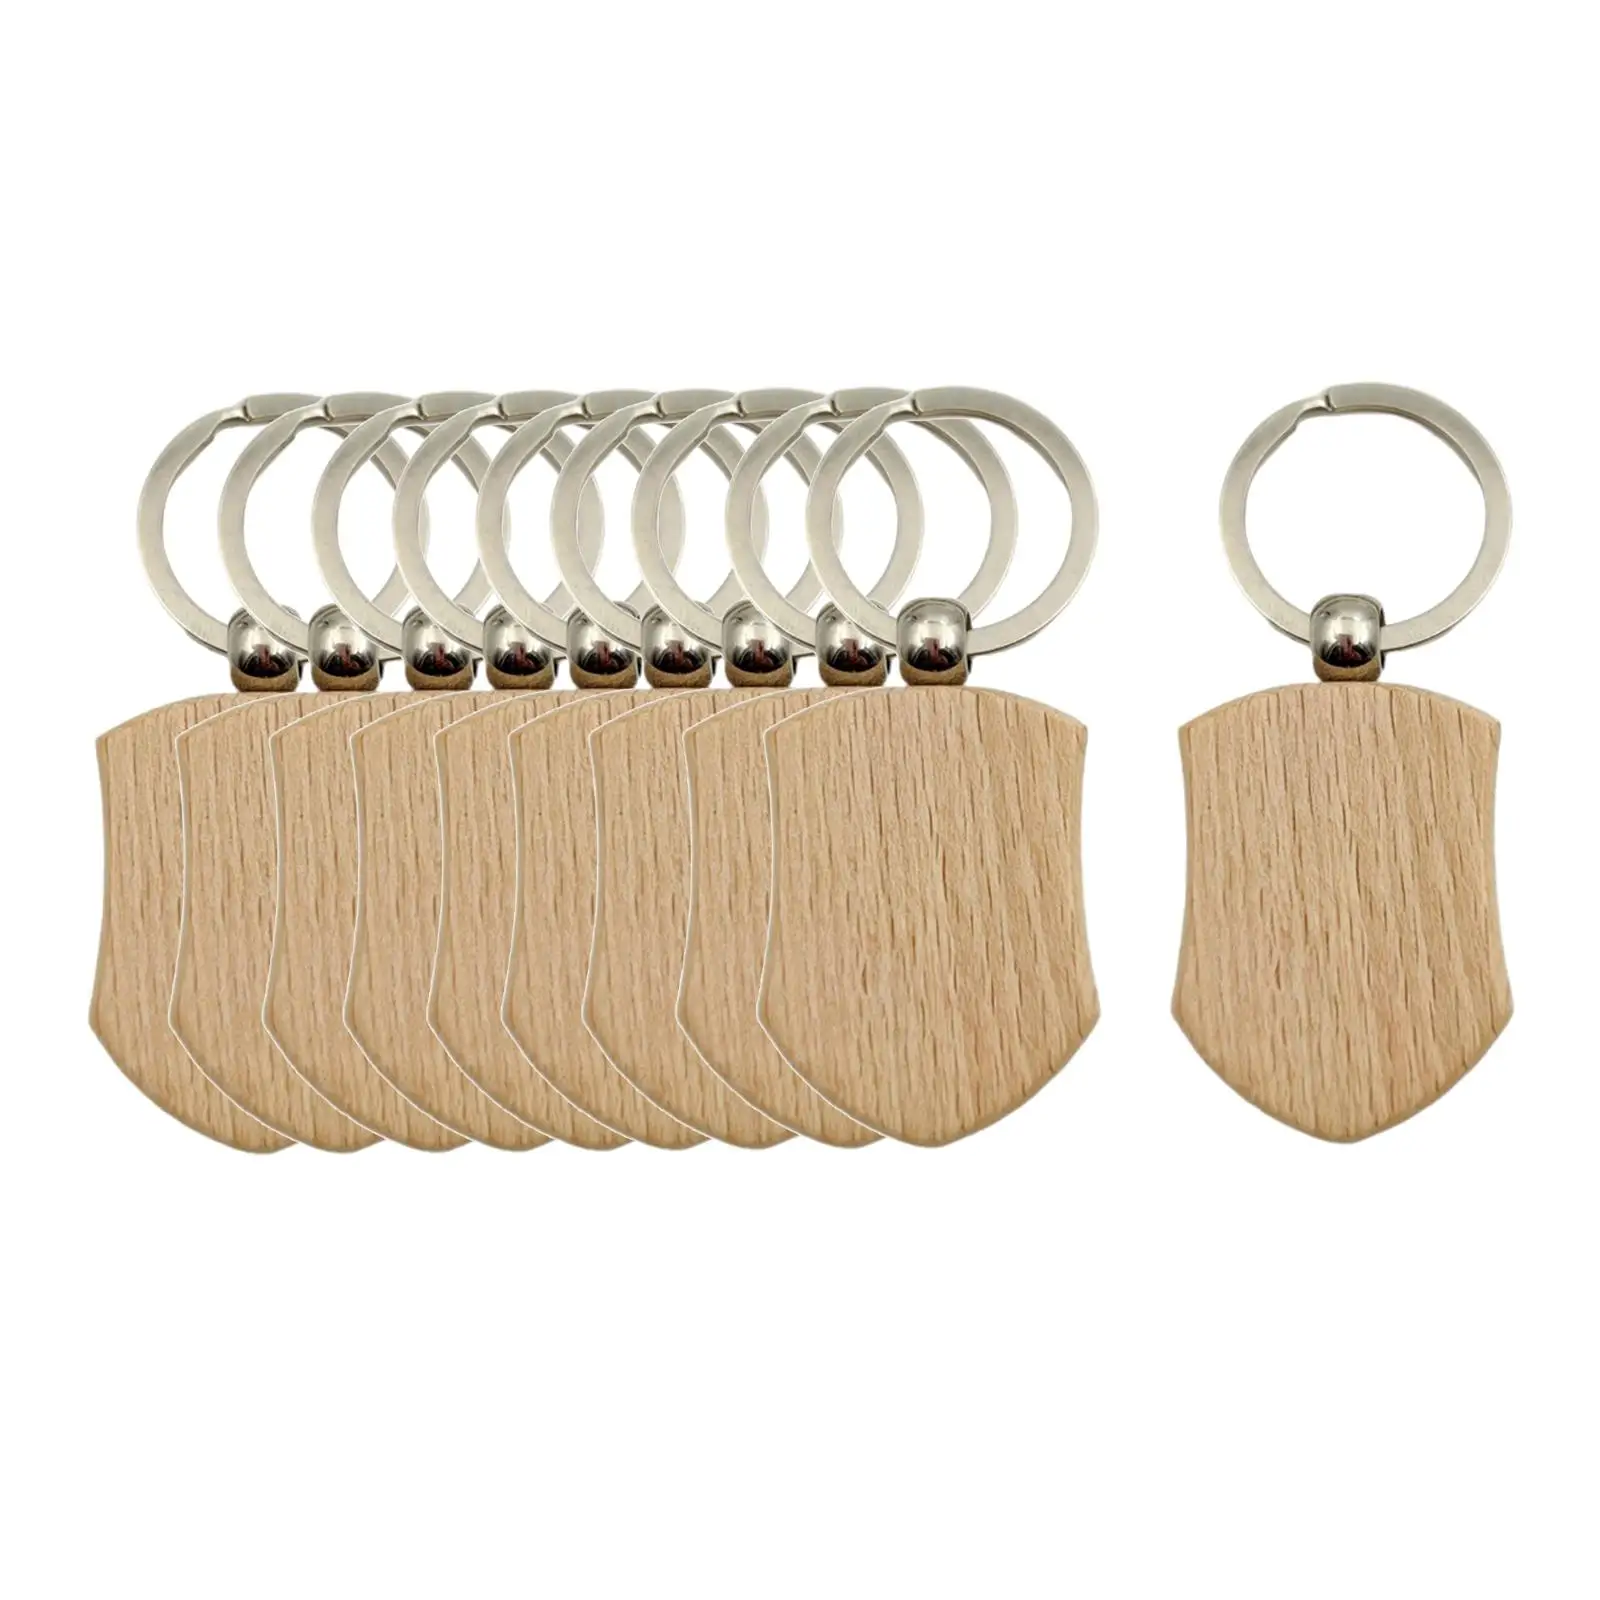 10Pcs Blanks Wooden Key Chain DIY Wood Piece Handmade Key Tags Key Rings Keychain Keyring for Craft Engraving Pyrography